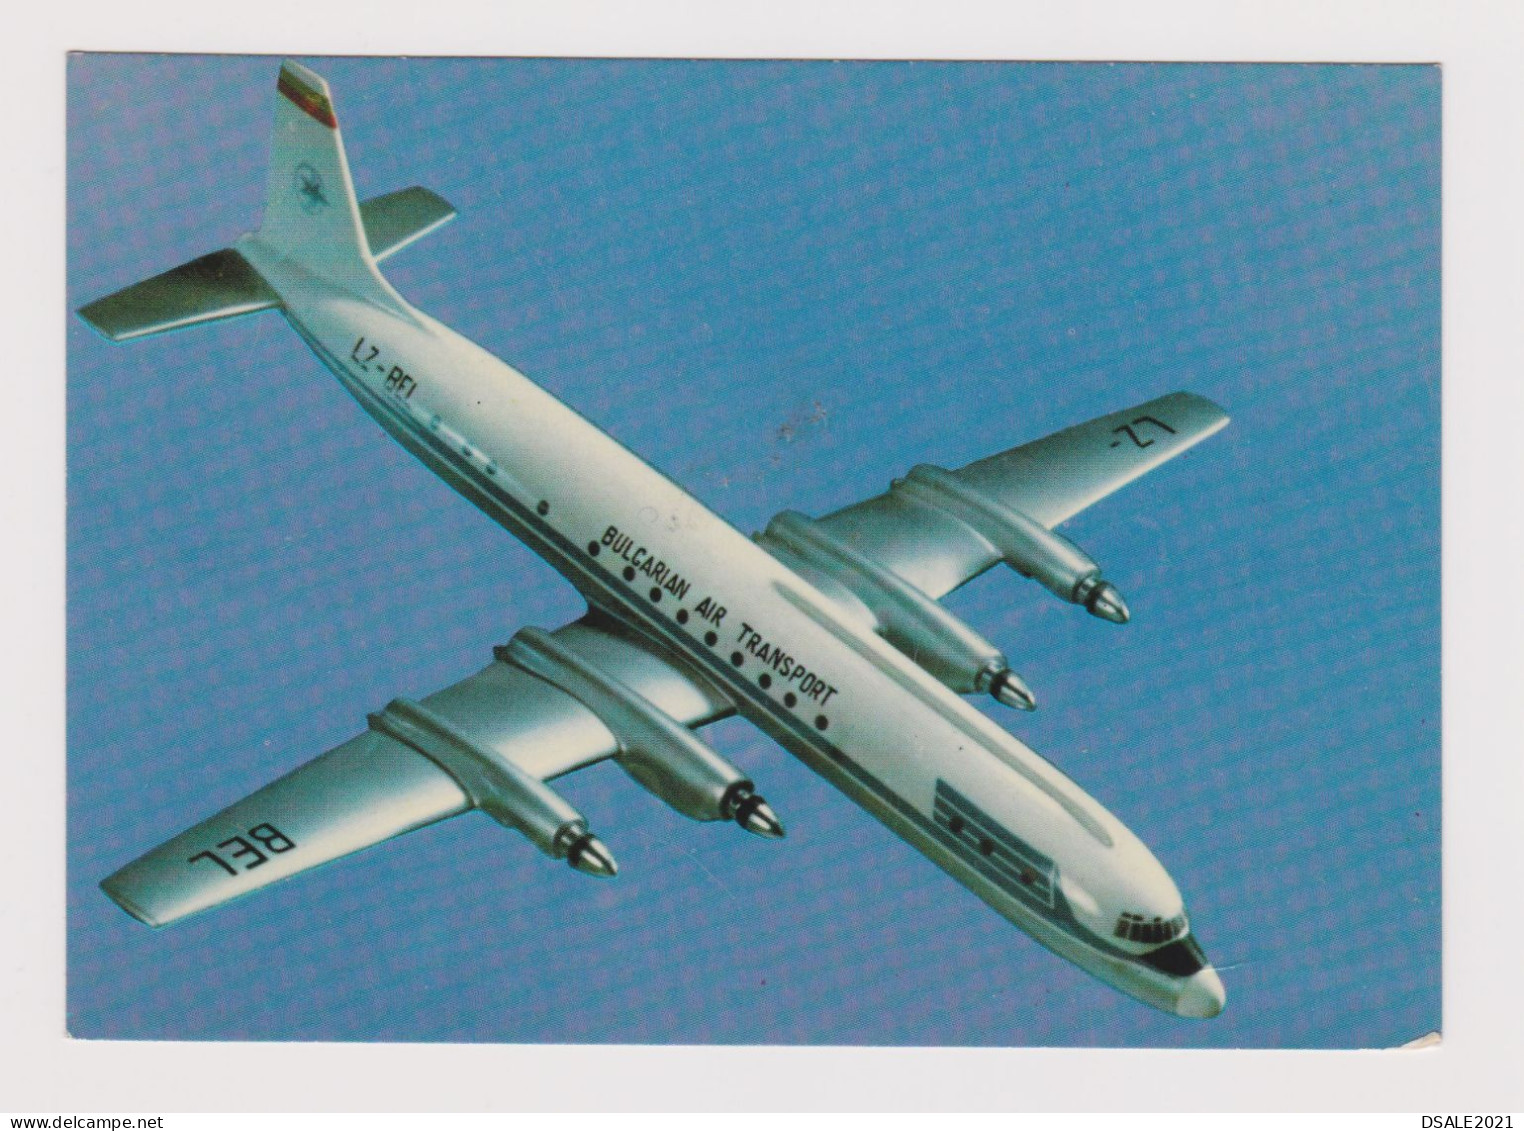 Bulgaria BULGARIAN AIR TRANSPORT Airplane IL-18 LZ-BEL, Vintage TABSO Advertising Photo Postcard RPPc AK (66061) - 1946-....: Era Moderna